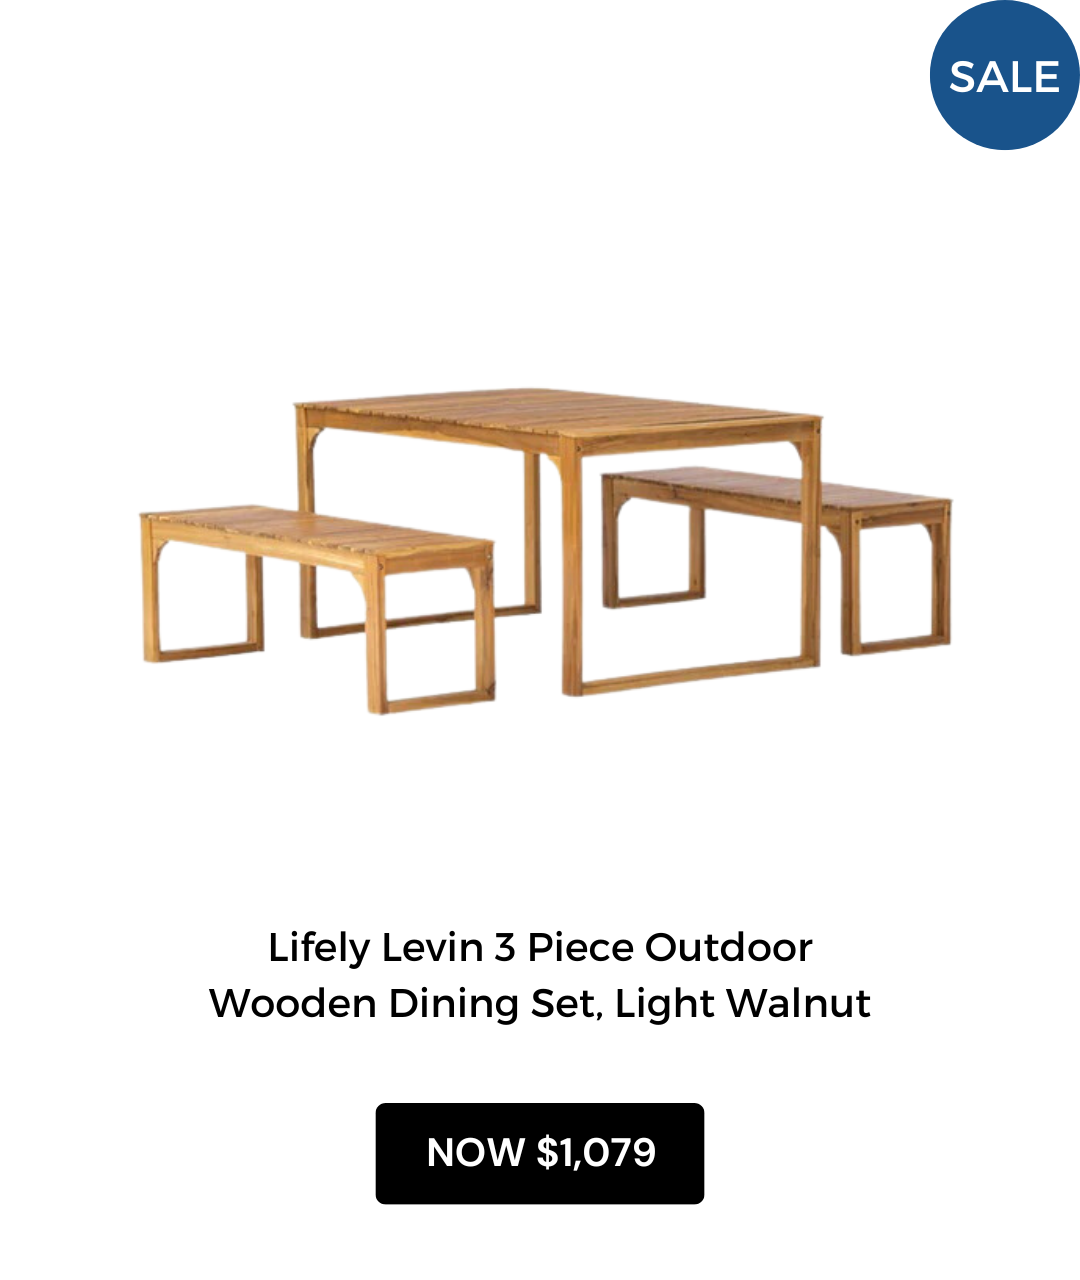 Lifely Levin 3 Piece Outdoor Wooden Dining Set, 90Wx150Lx75H cm, Light Walnut